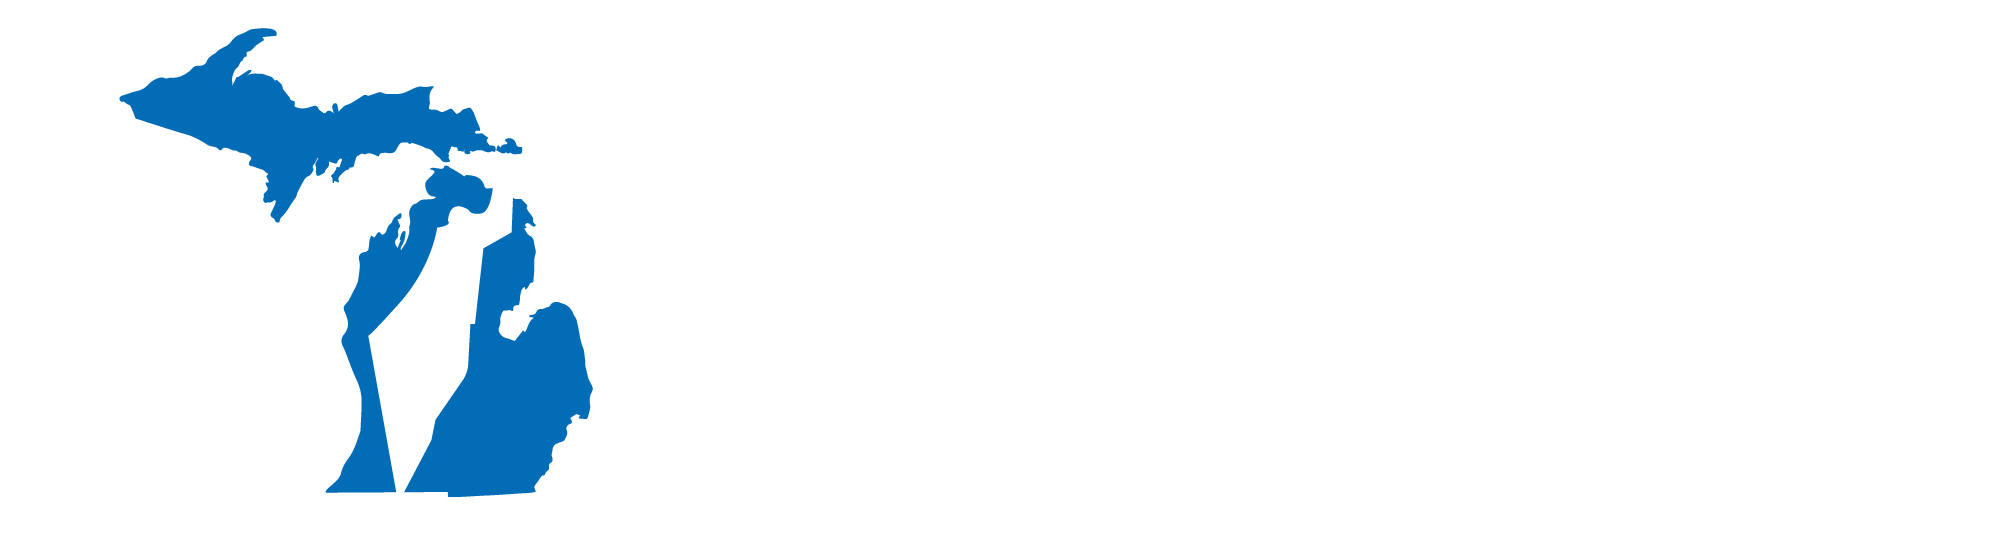 Michigan Israel Business Accelerator